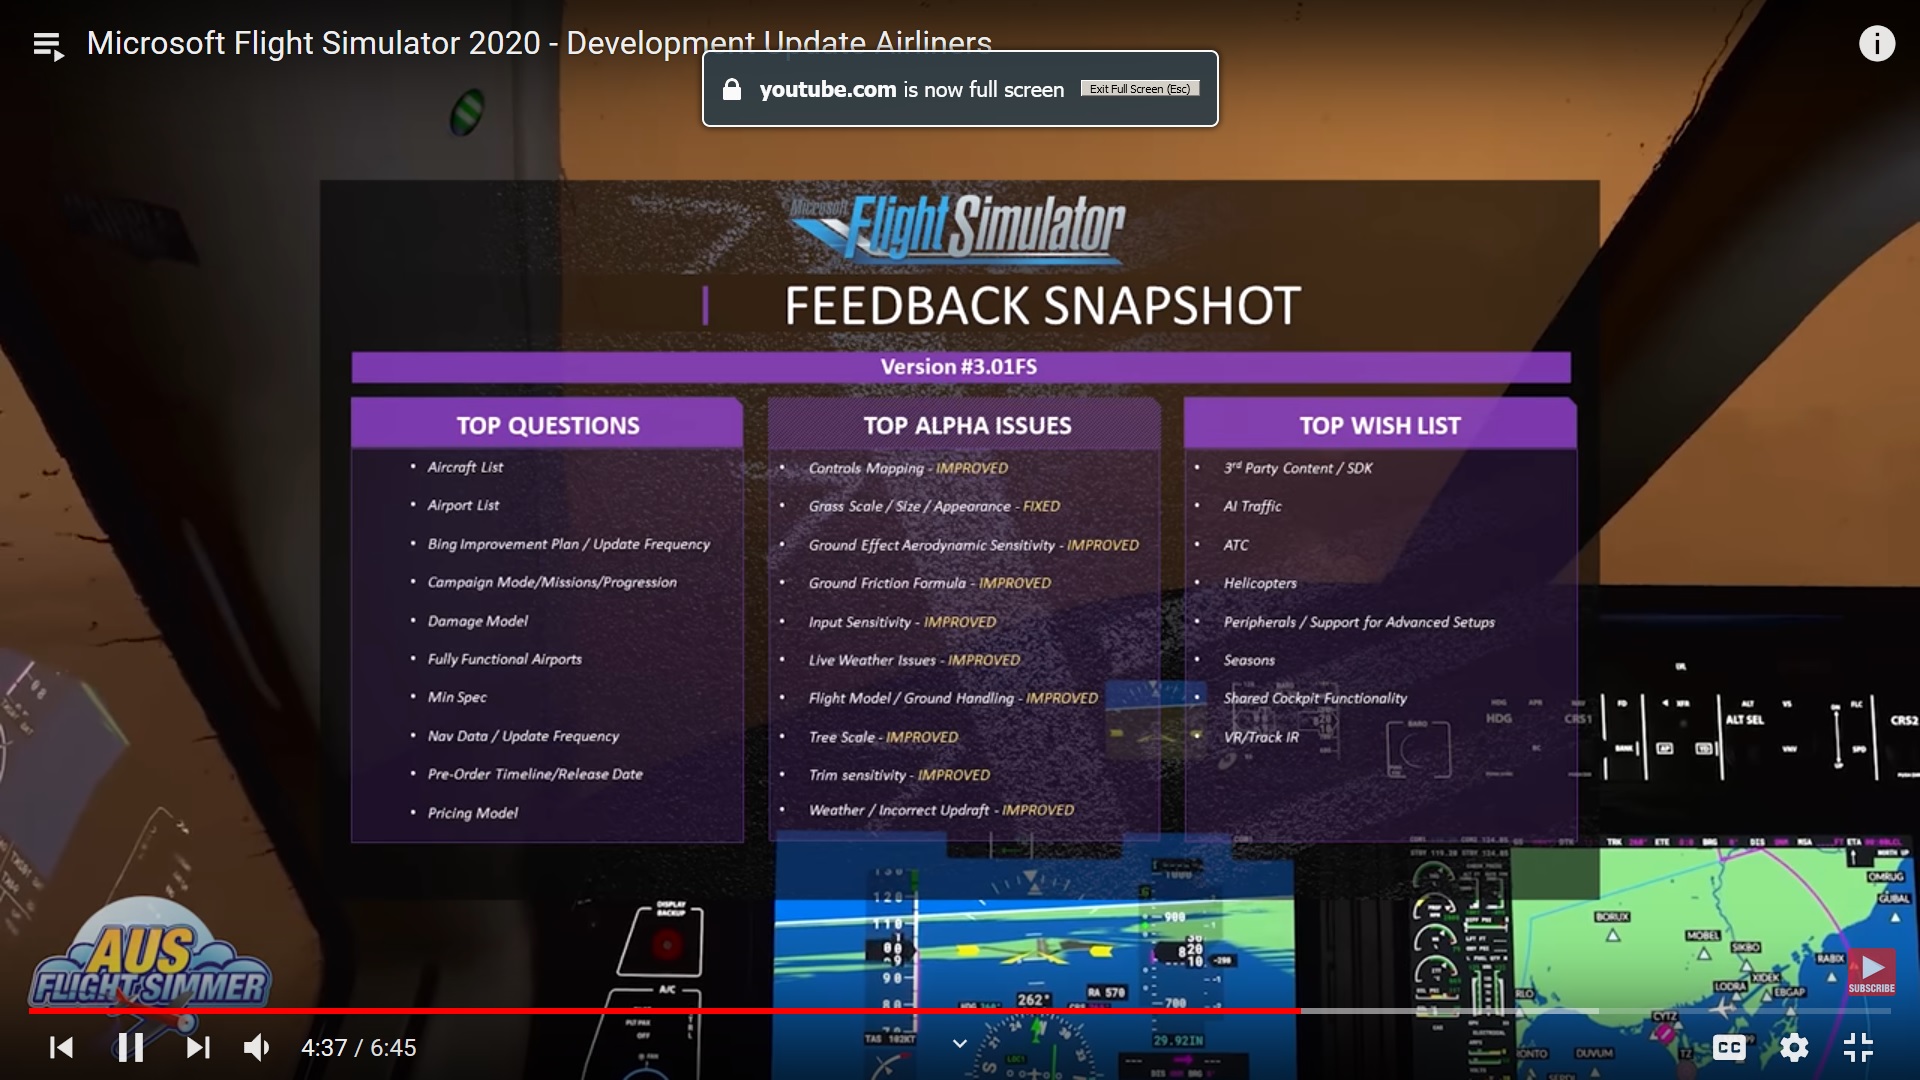 msfs-2020_feedback_version-3_01fs_video_screenshot-jpg.59967